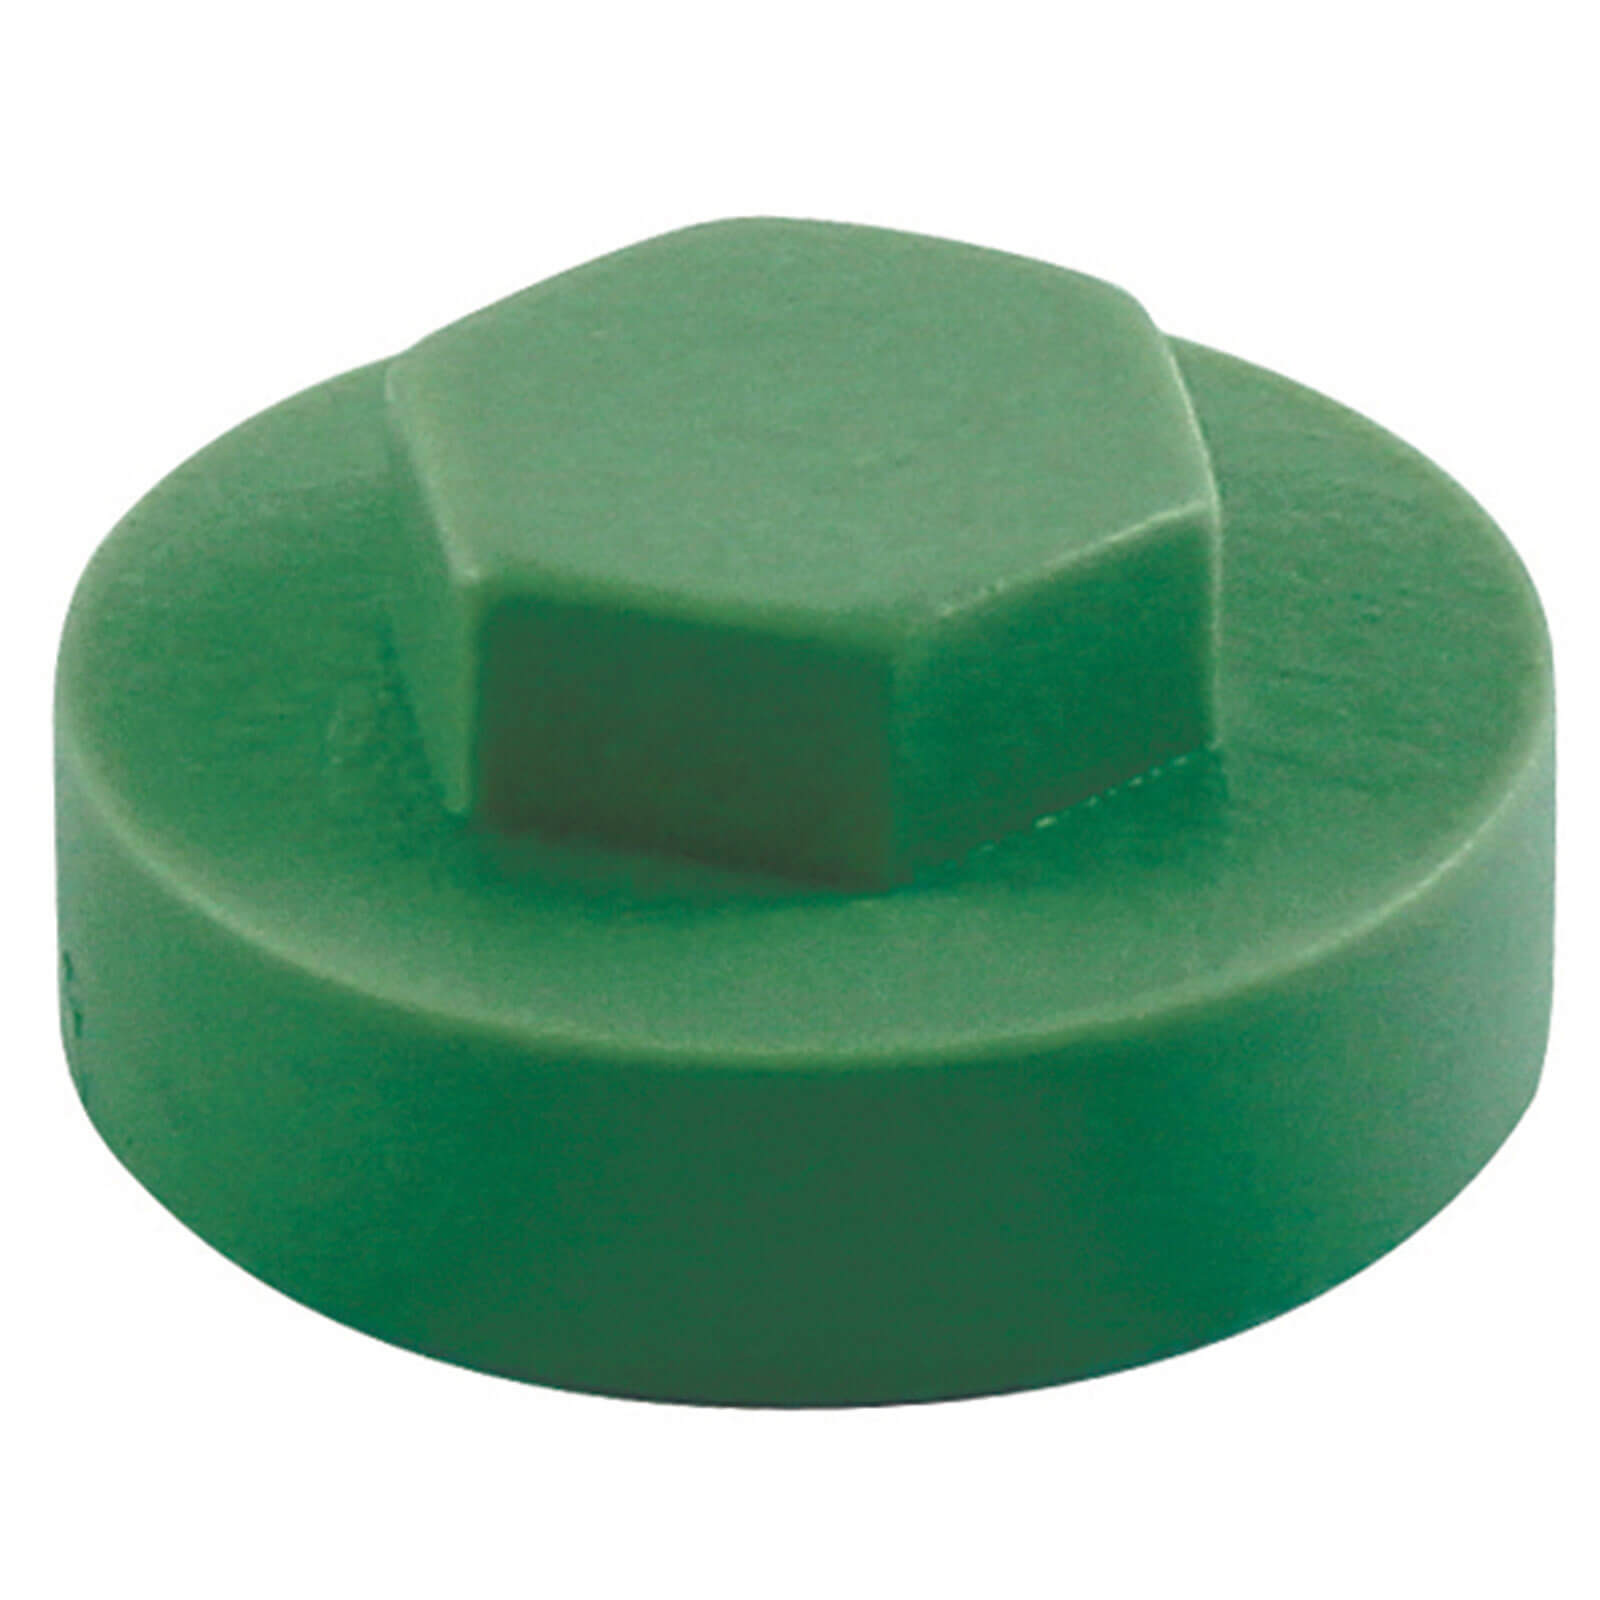 Image of Colour Match Hexagon Screw Cover Cap 5/16" x 19mm Juniper Green Pack of 1000